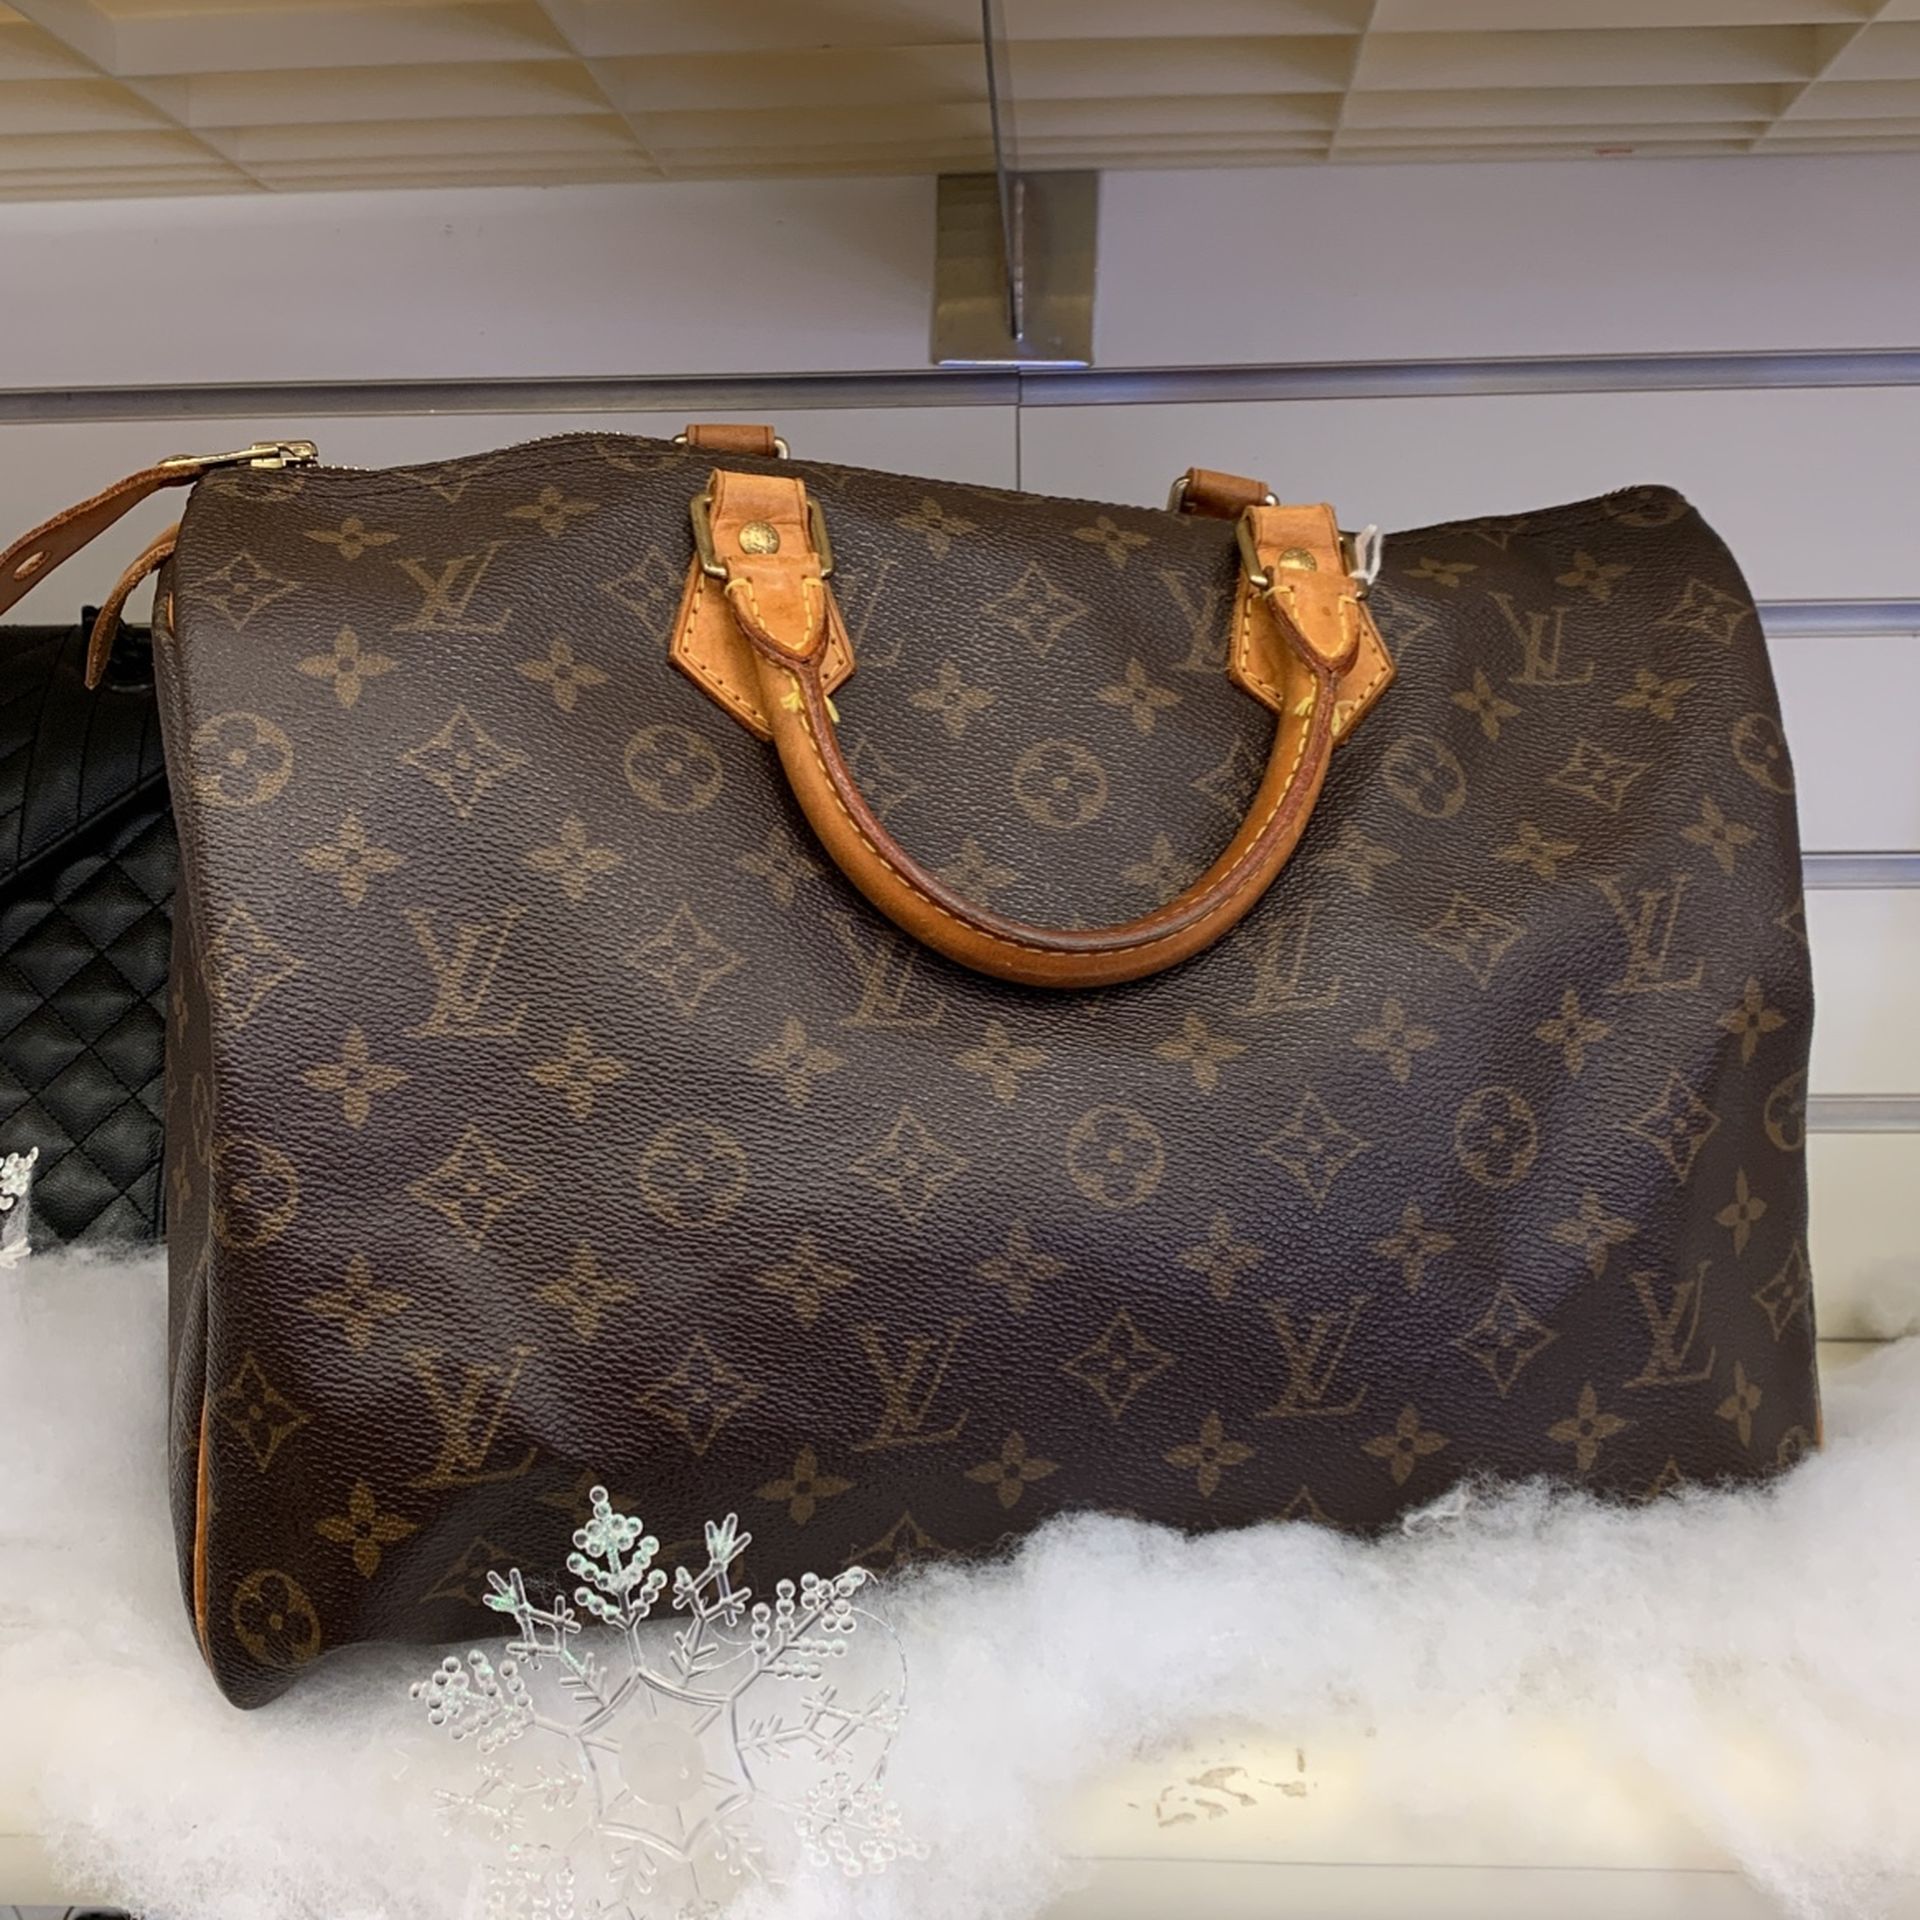 New Louis Vuitton Artsy Handbag for Sale in Woodstock, GA - OfferUp